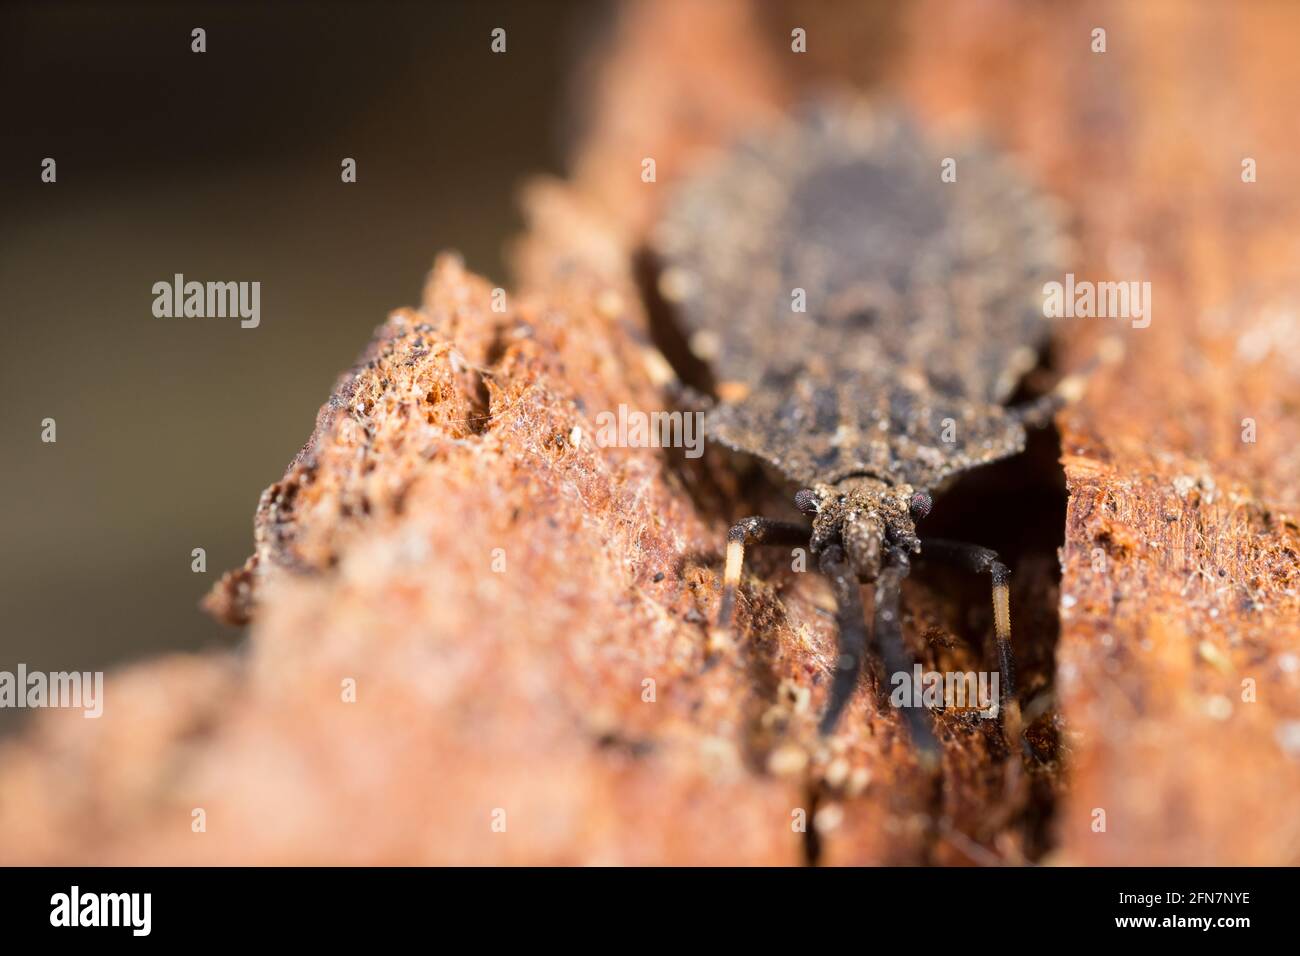 Flatbug (Aradus brevicollis) Stock Photo